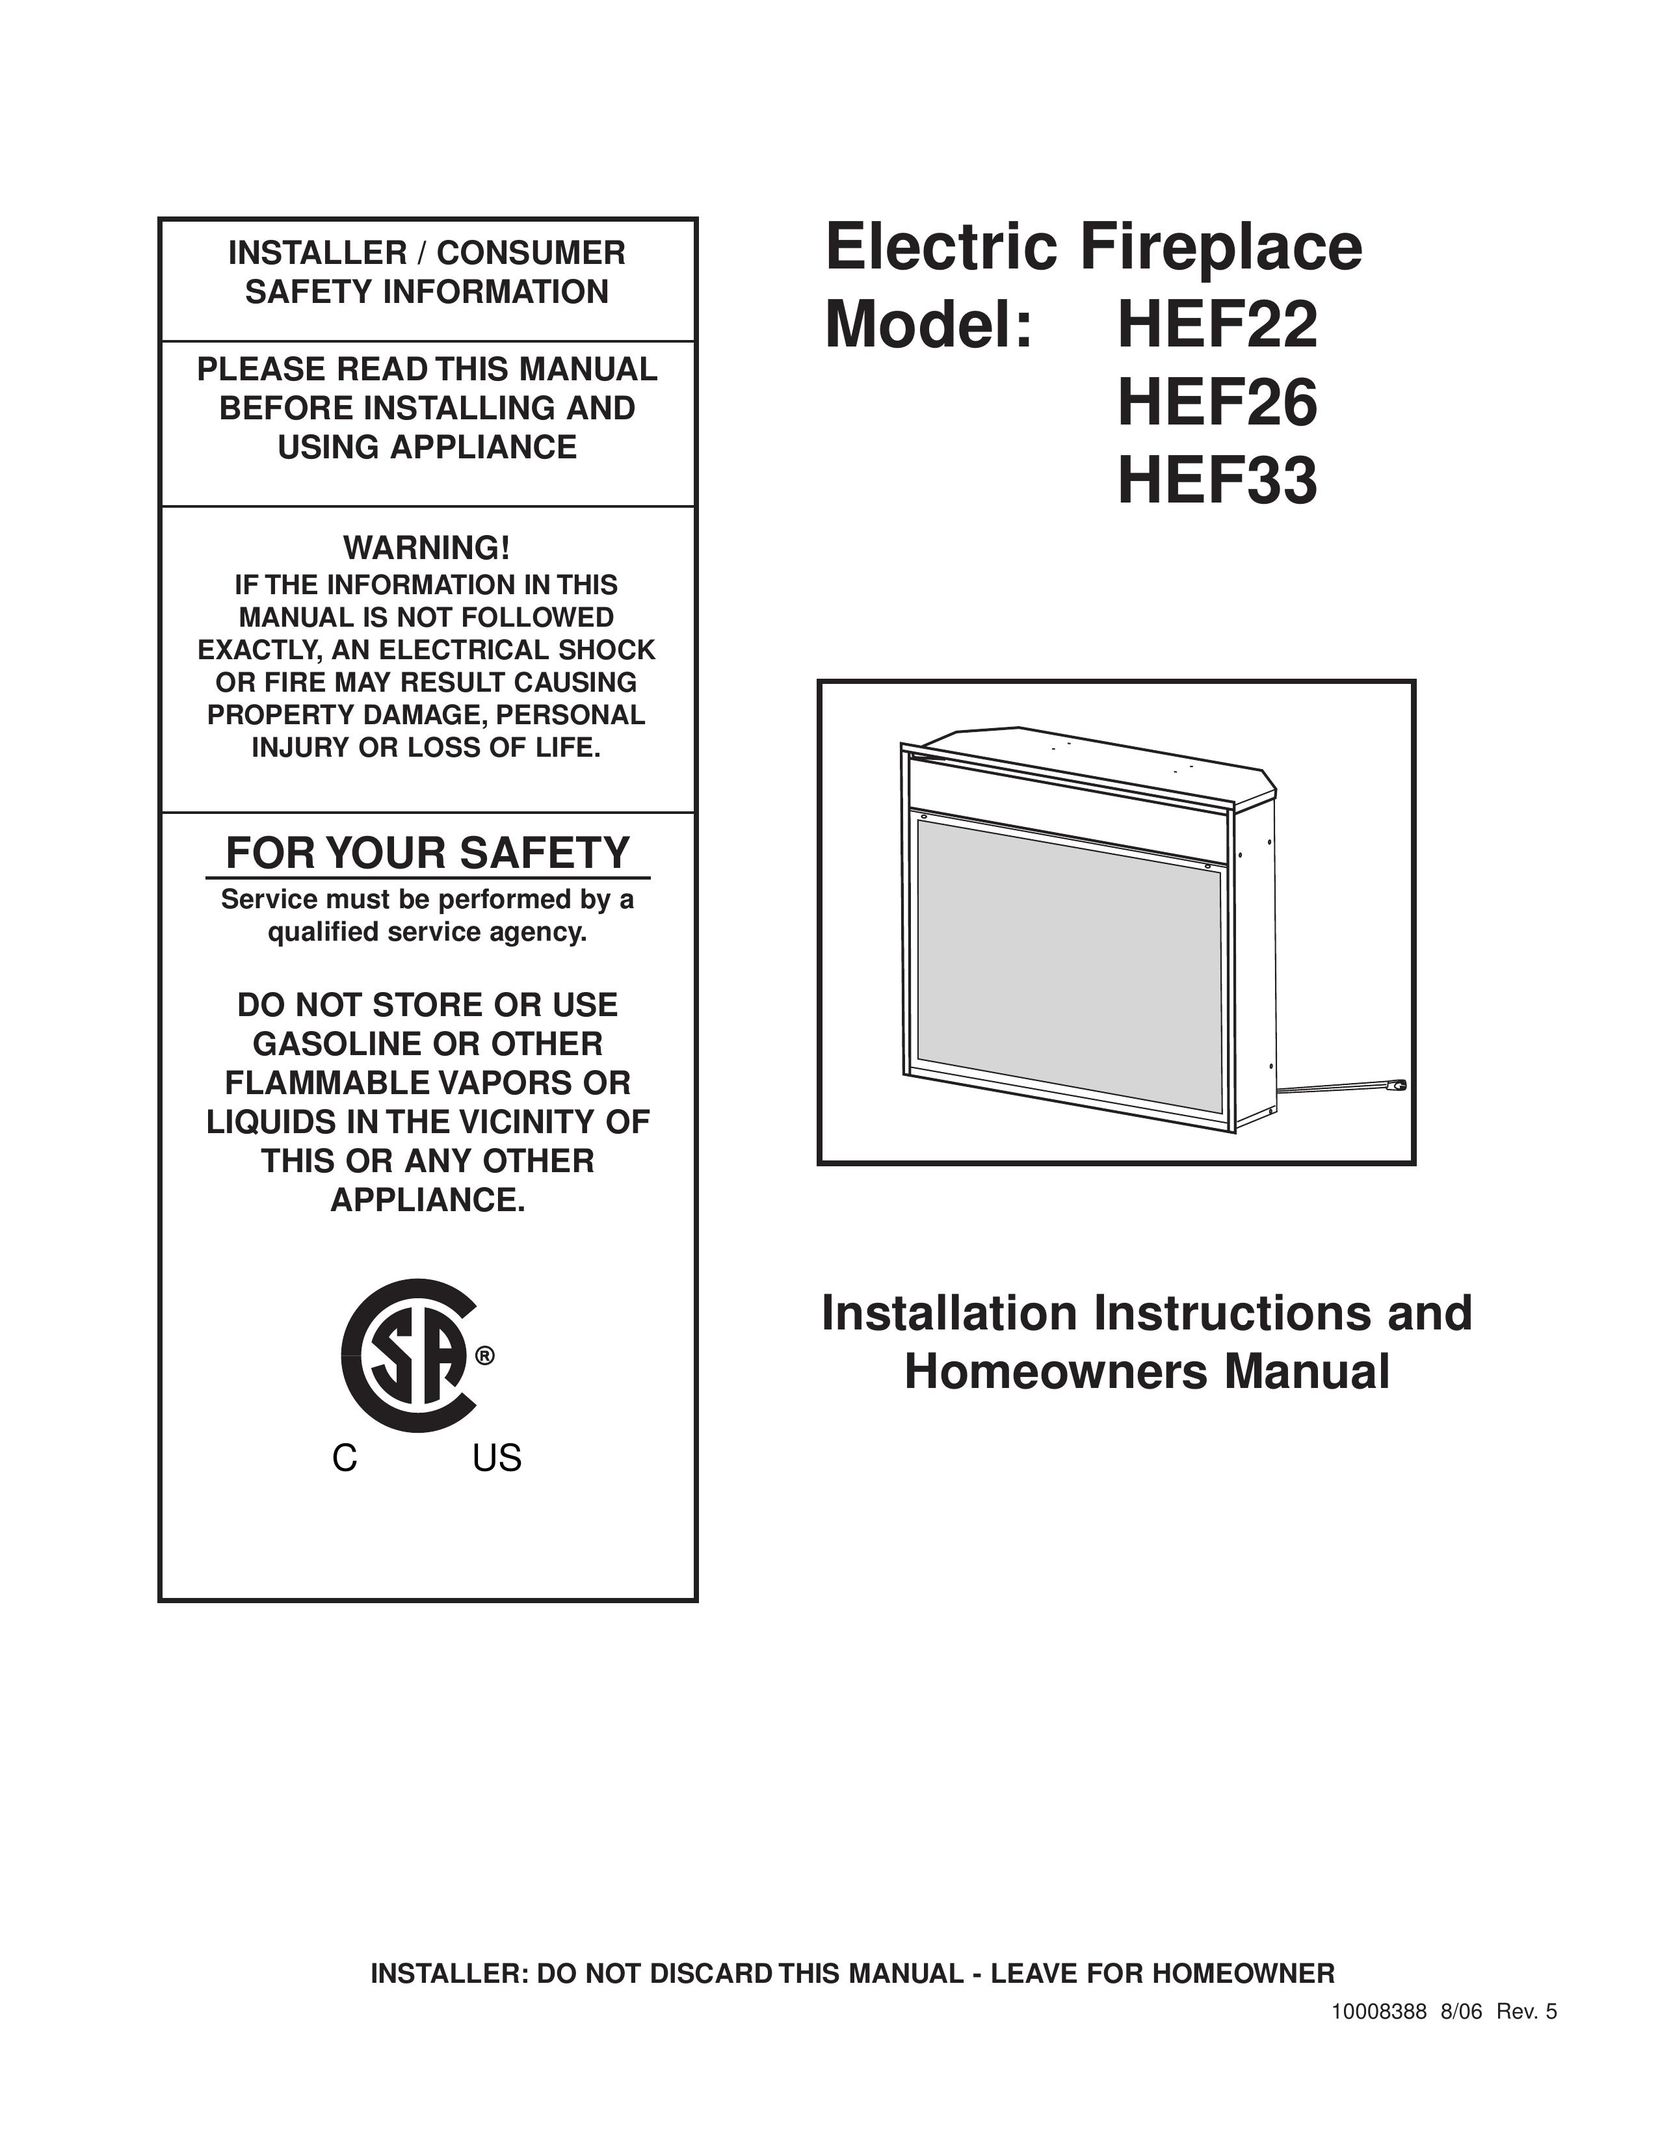 CFM Corporation HEF22 Indoor Fireplace User Manual